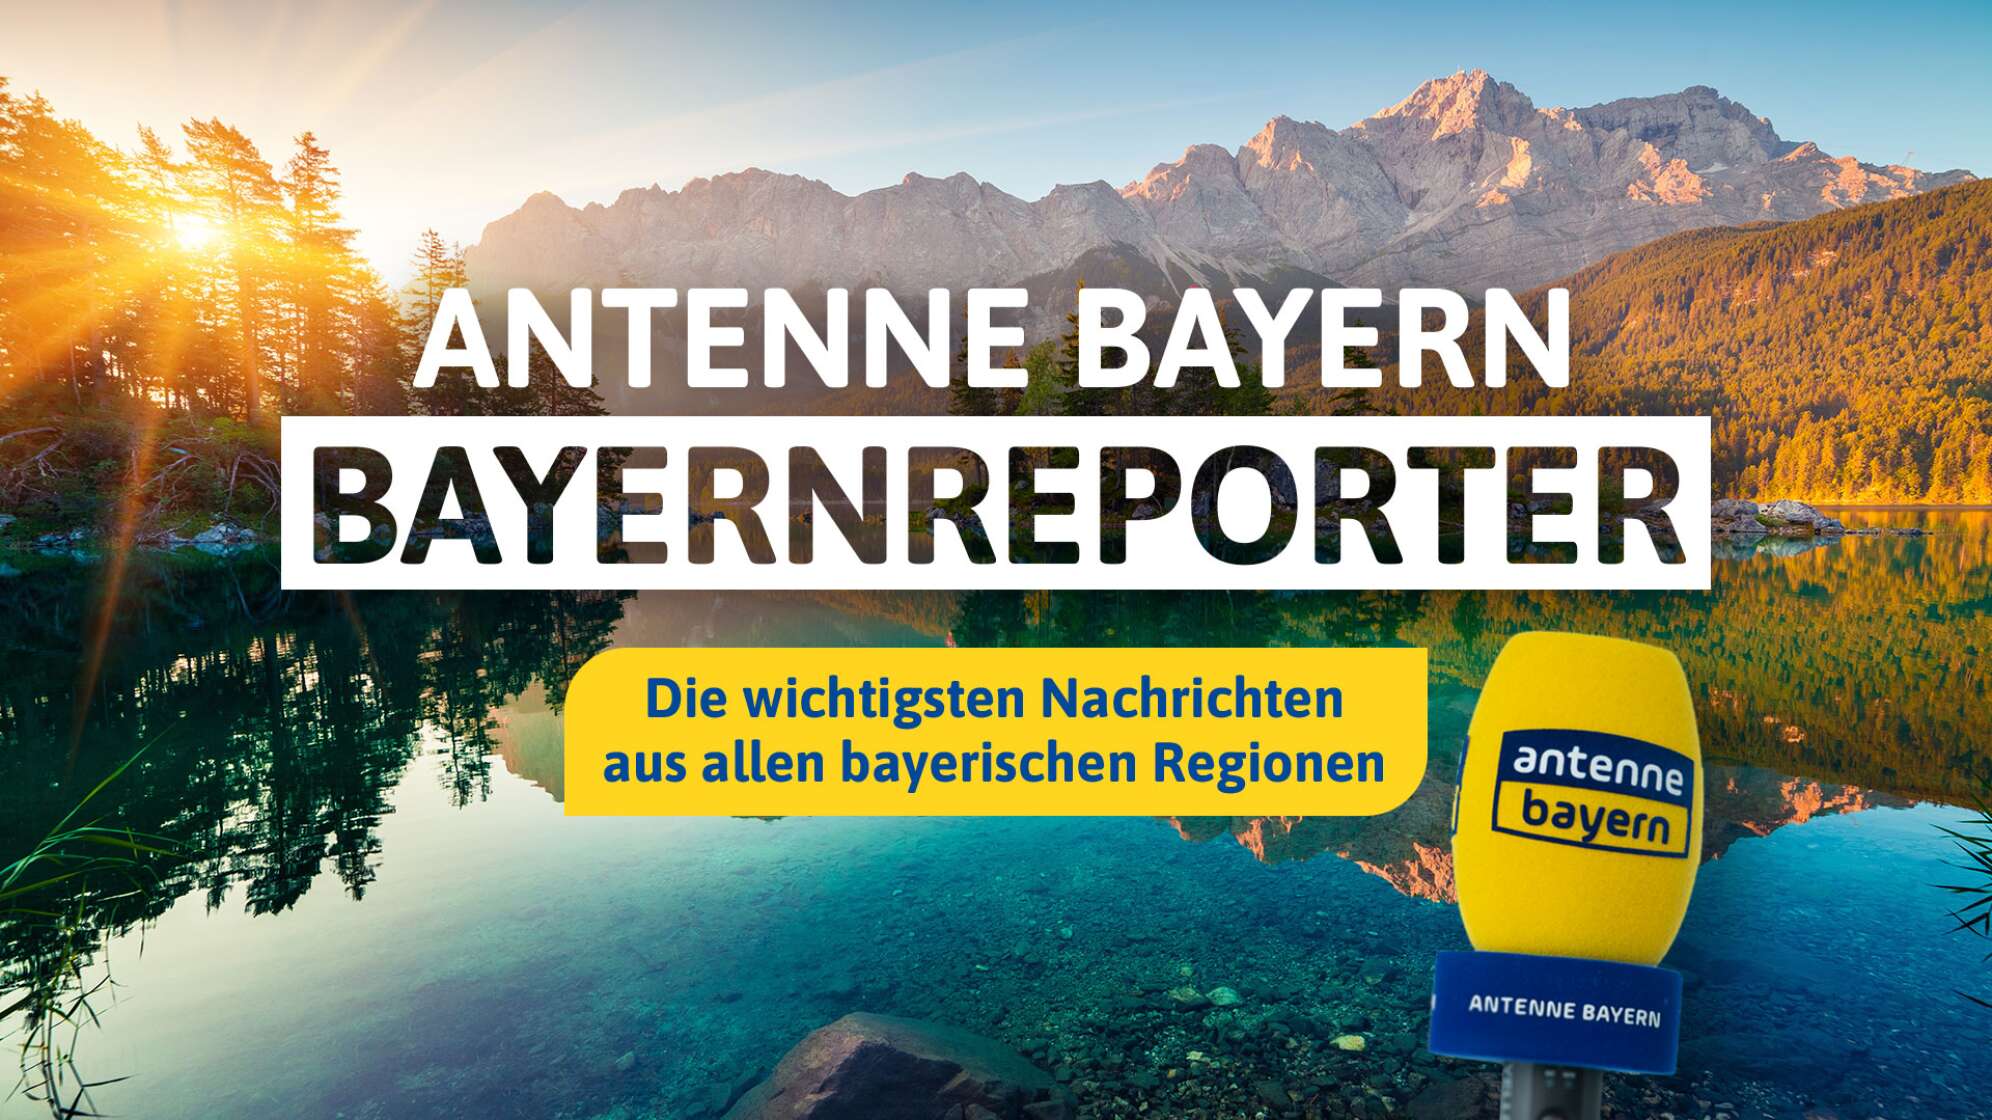 Die ANTENNE BAYERN Bayernreporter